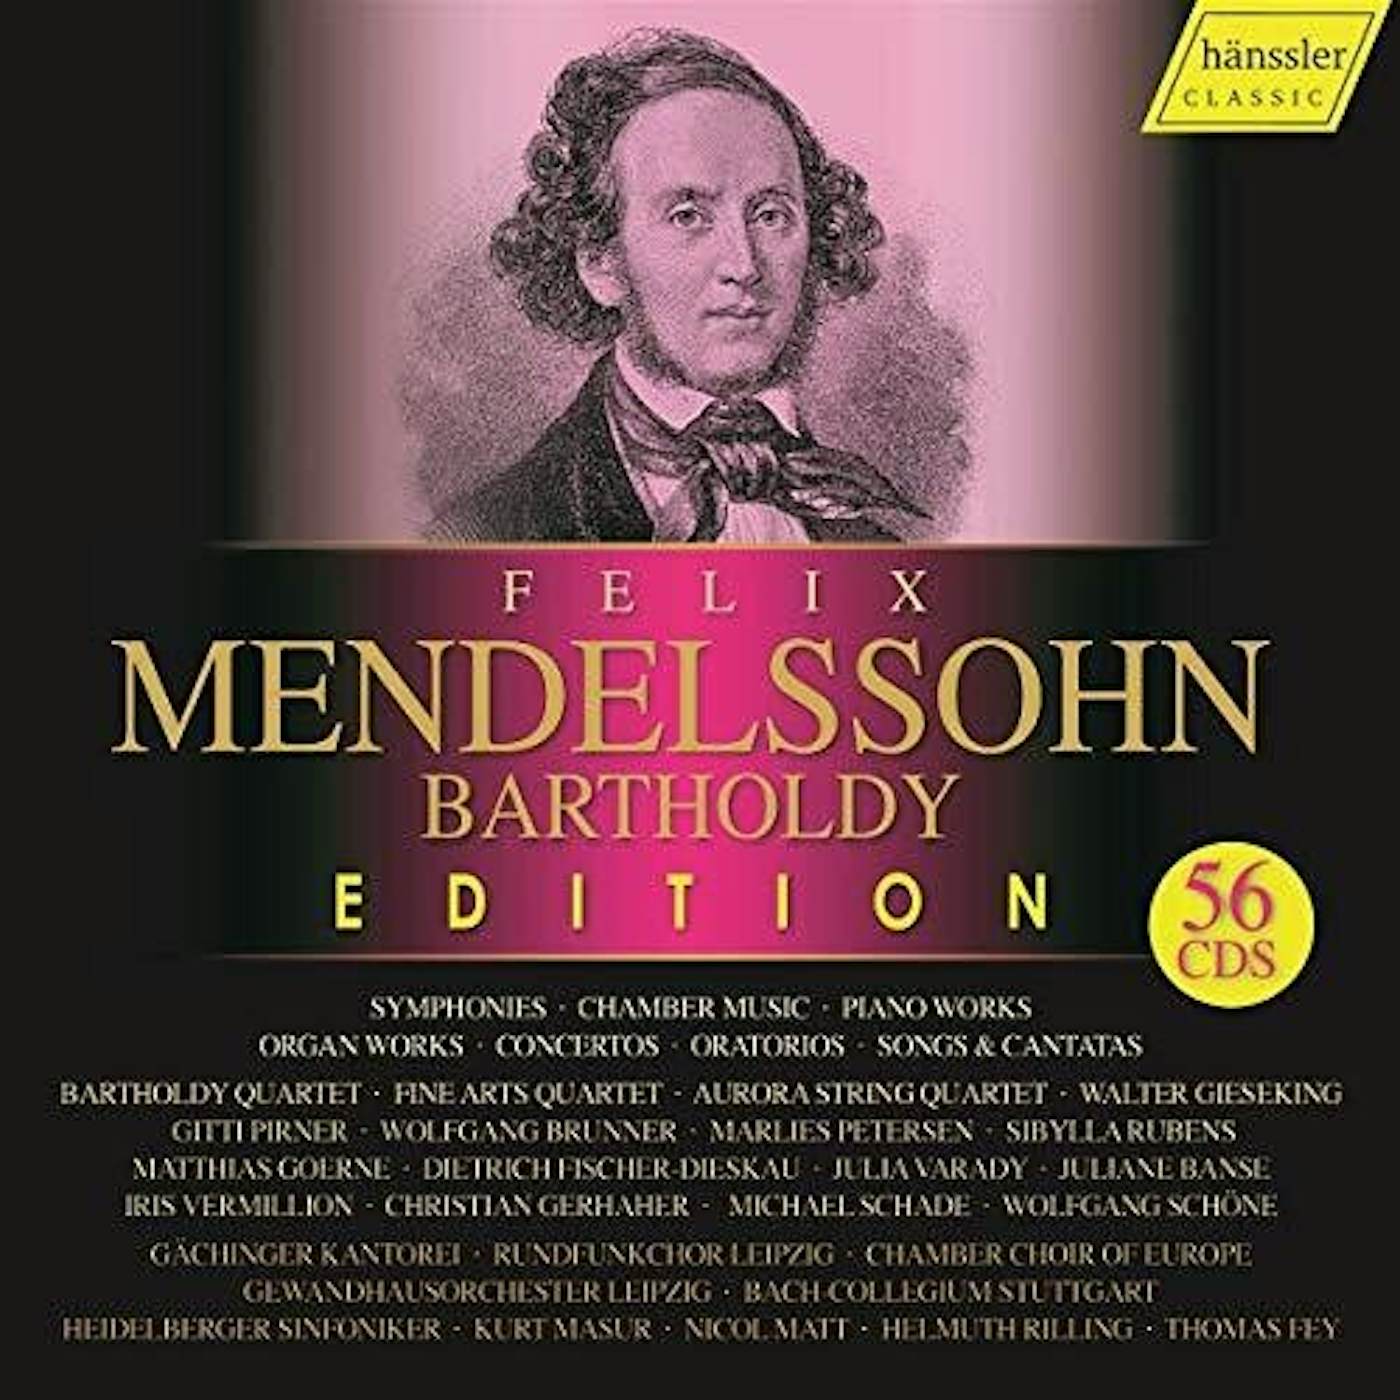 Mendelssohn-Bartholdy MENDELSSOHN BARTHOLDY EDITION CD